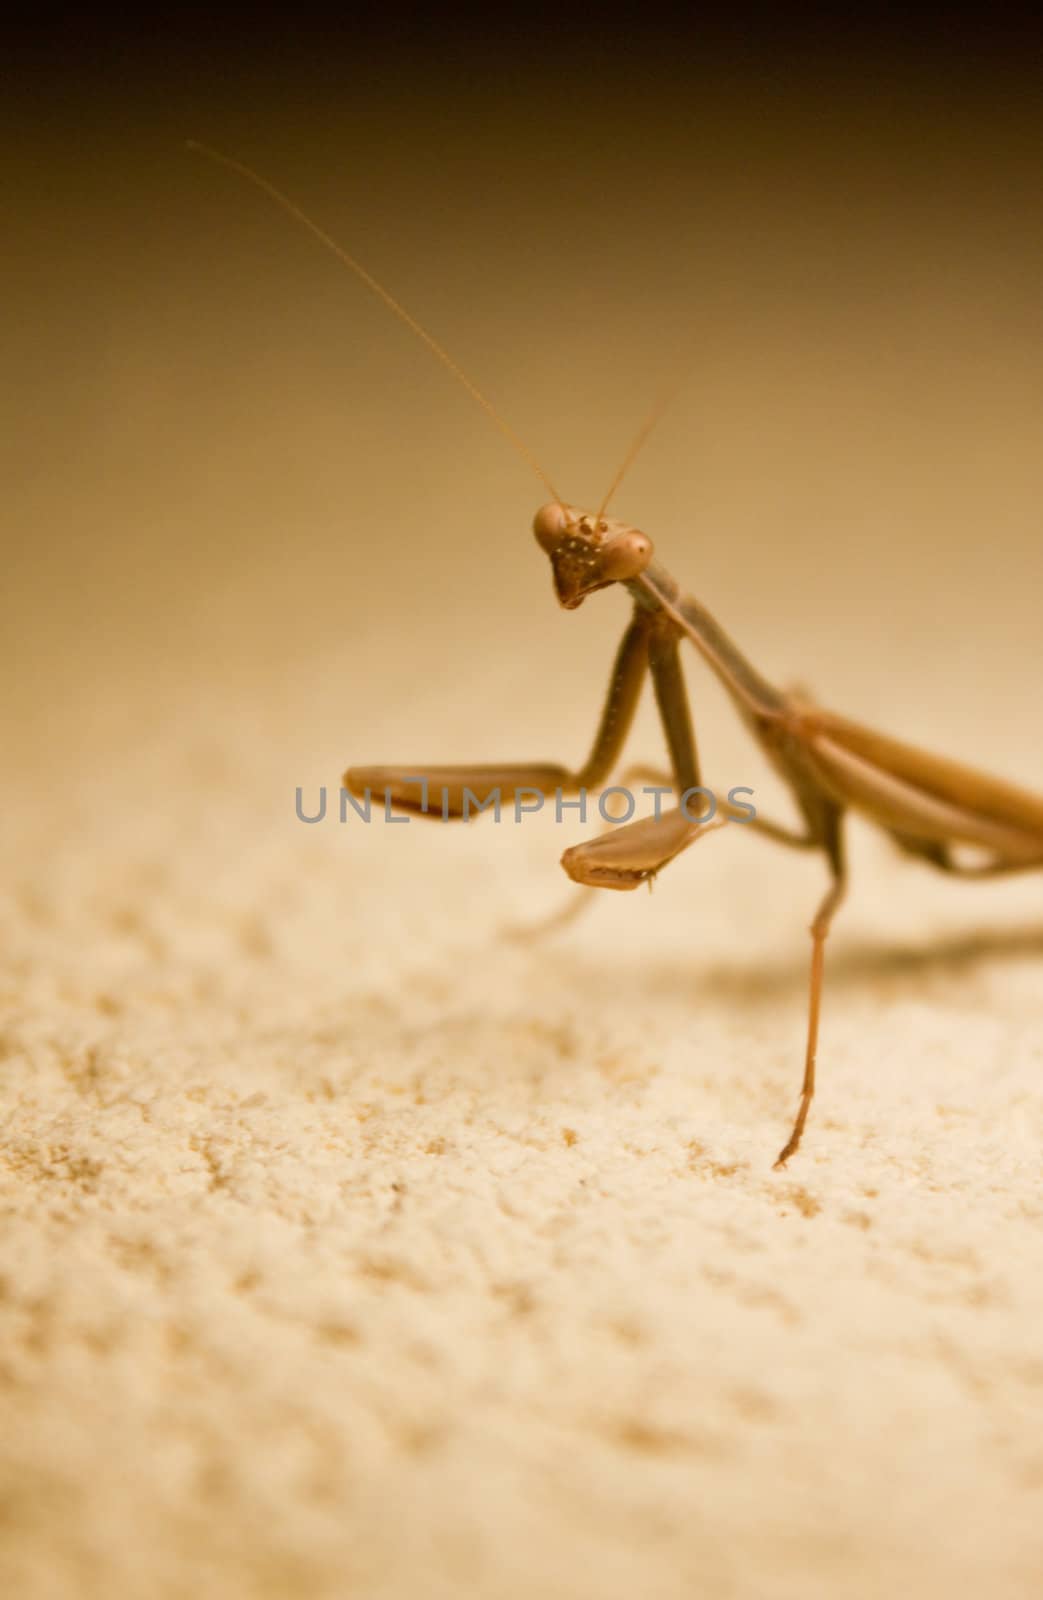 Mantis religiosa, praying mantis looking at camera with folded arms